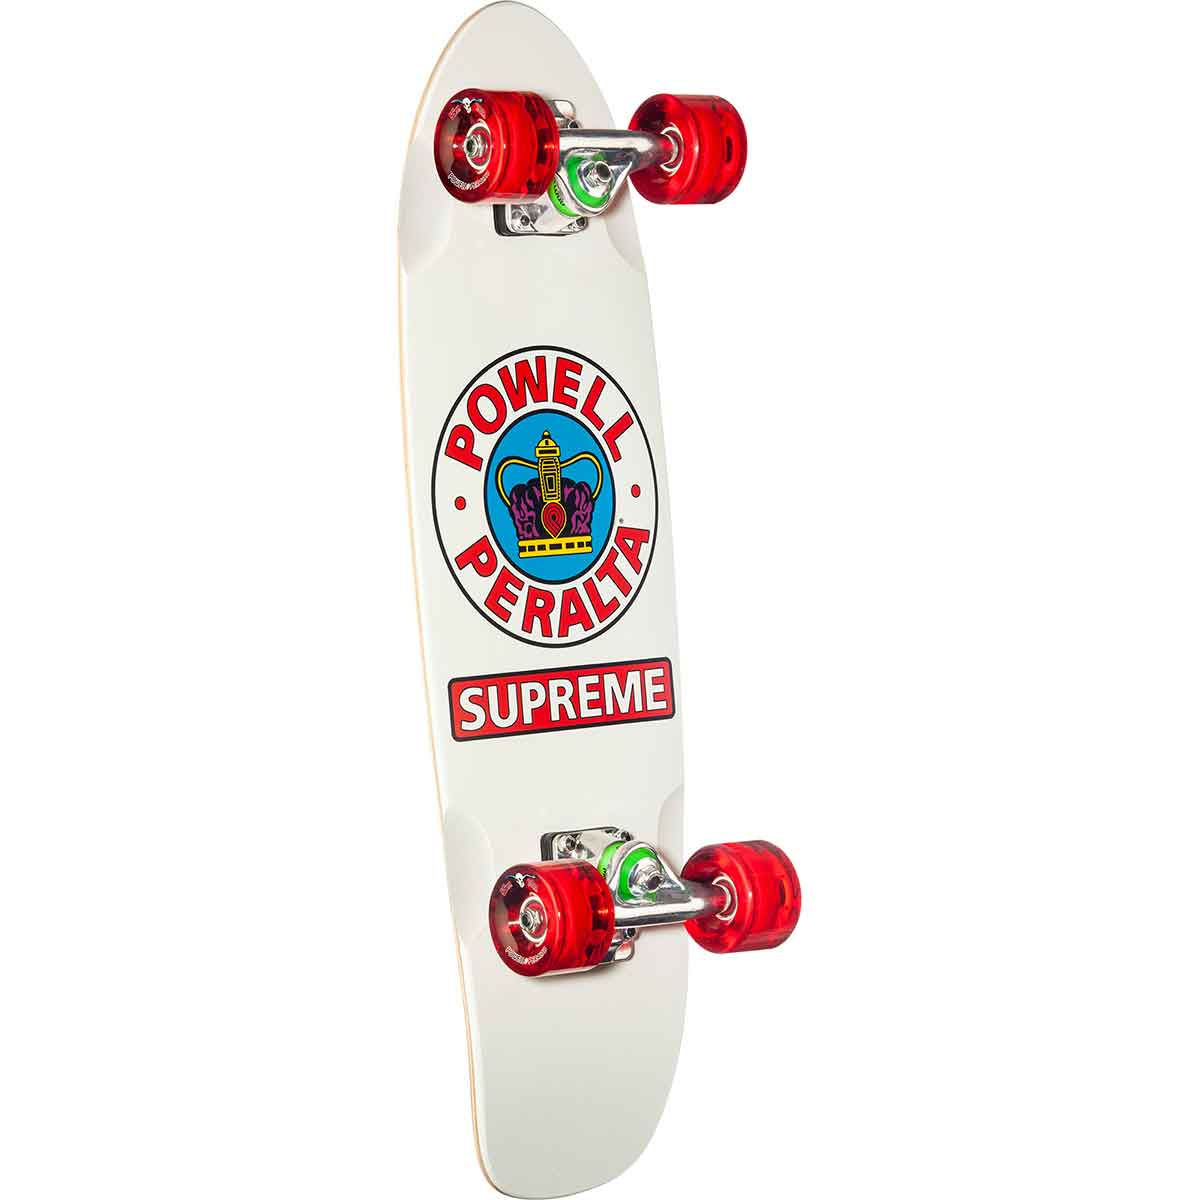 Pop art iconographs': Supreme skateboards go under hammer, Skateboarding